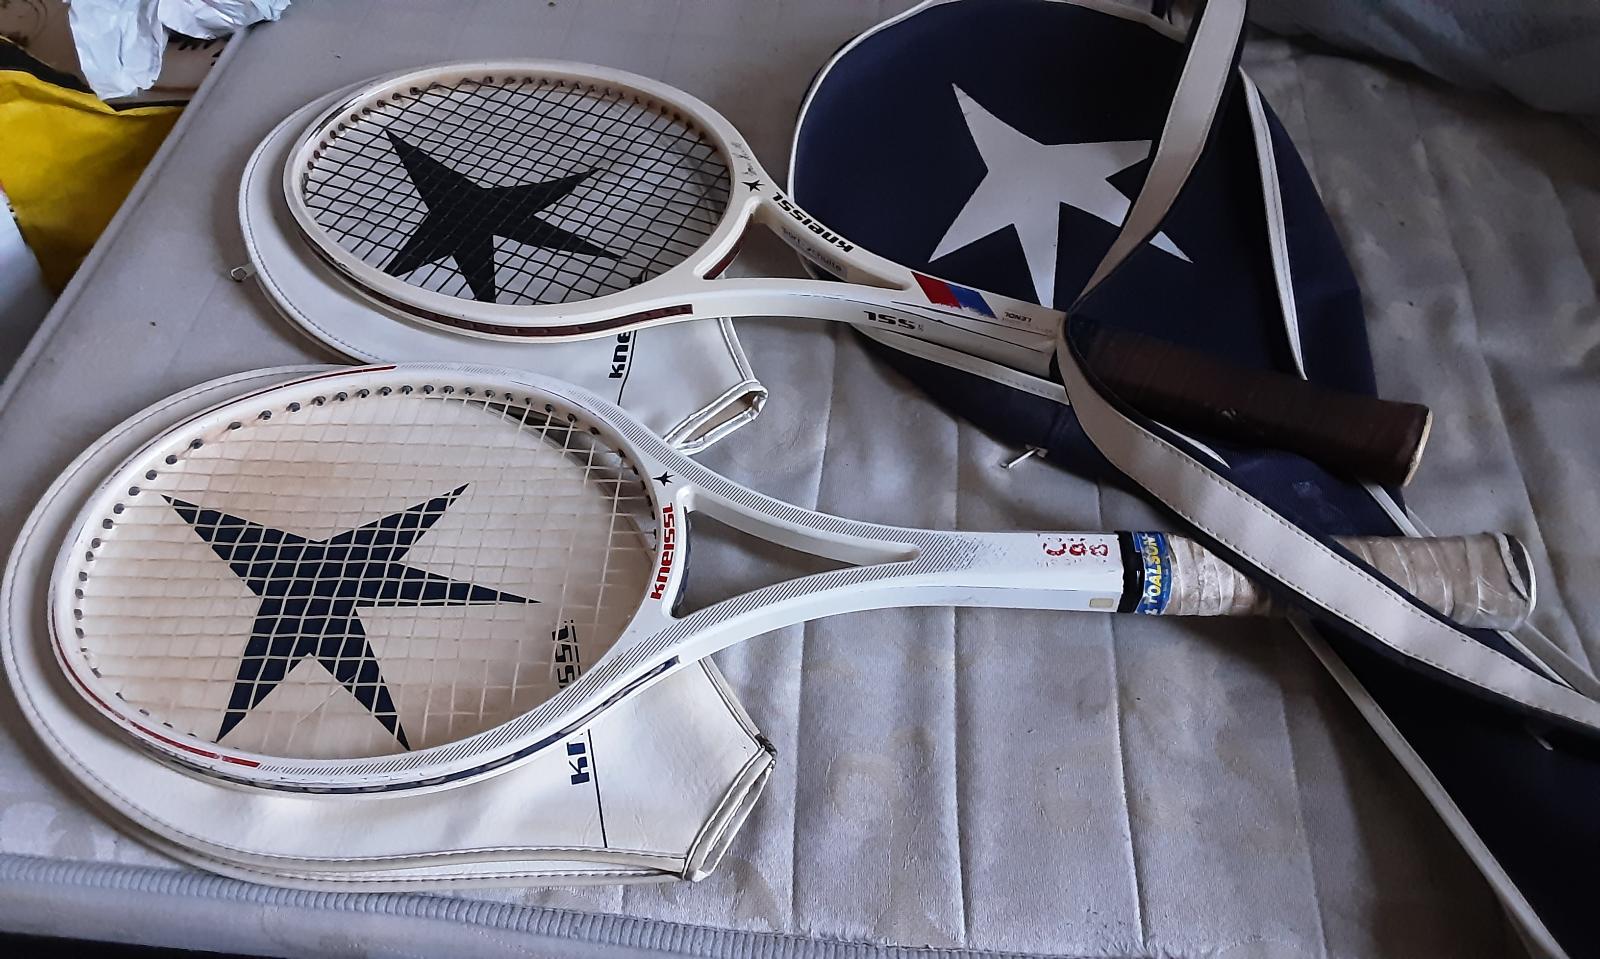 2x tenisová raketa Kneissl White Star Pro, Ivan Lendl. - Vybavenie na tenis, squash, bedminton